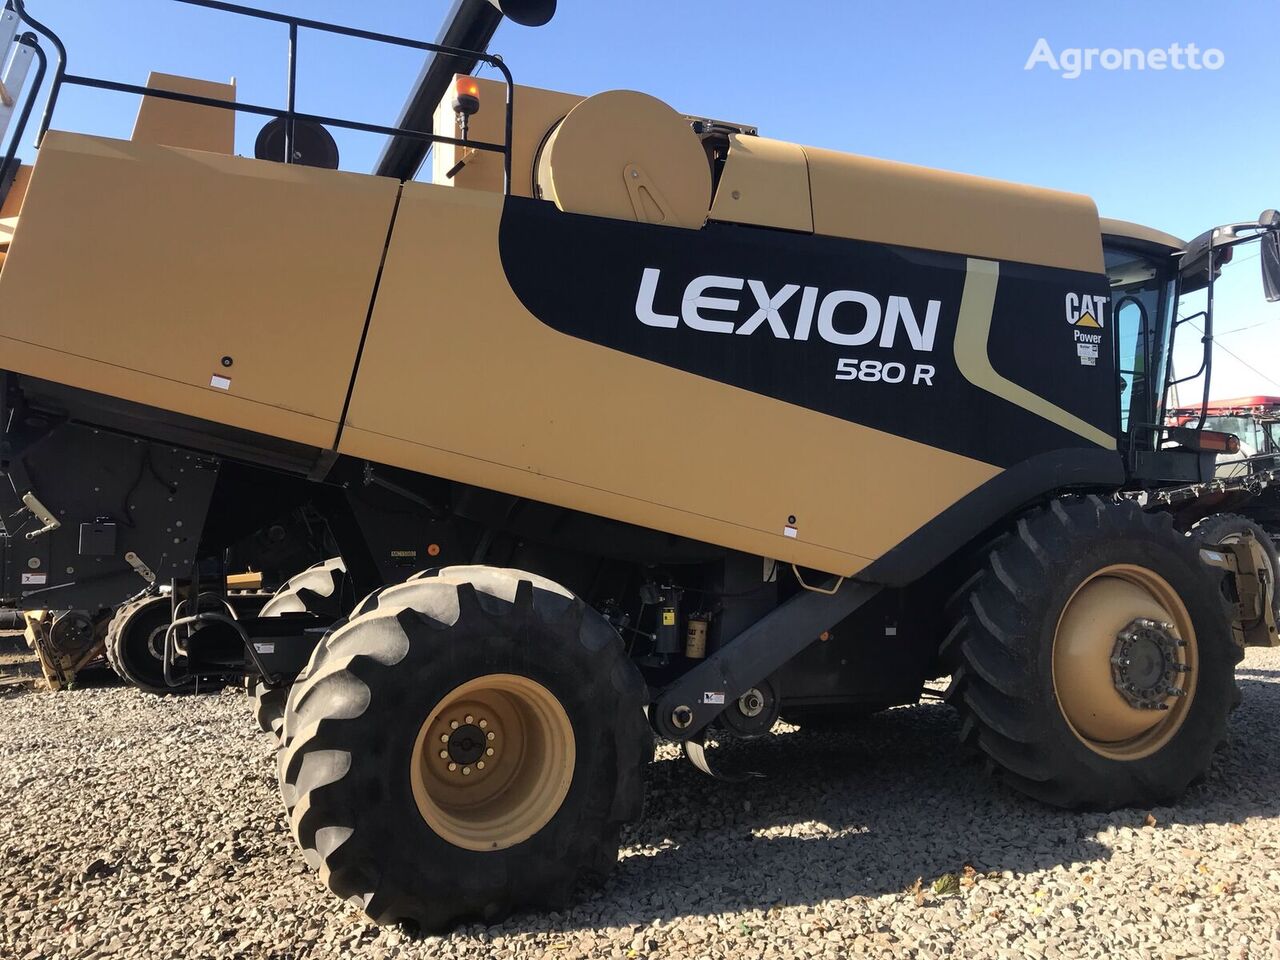 Claas Lexion 580R grain harvester